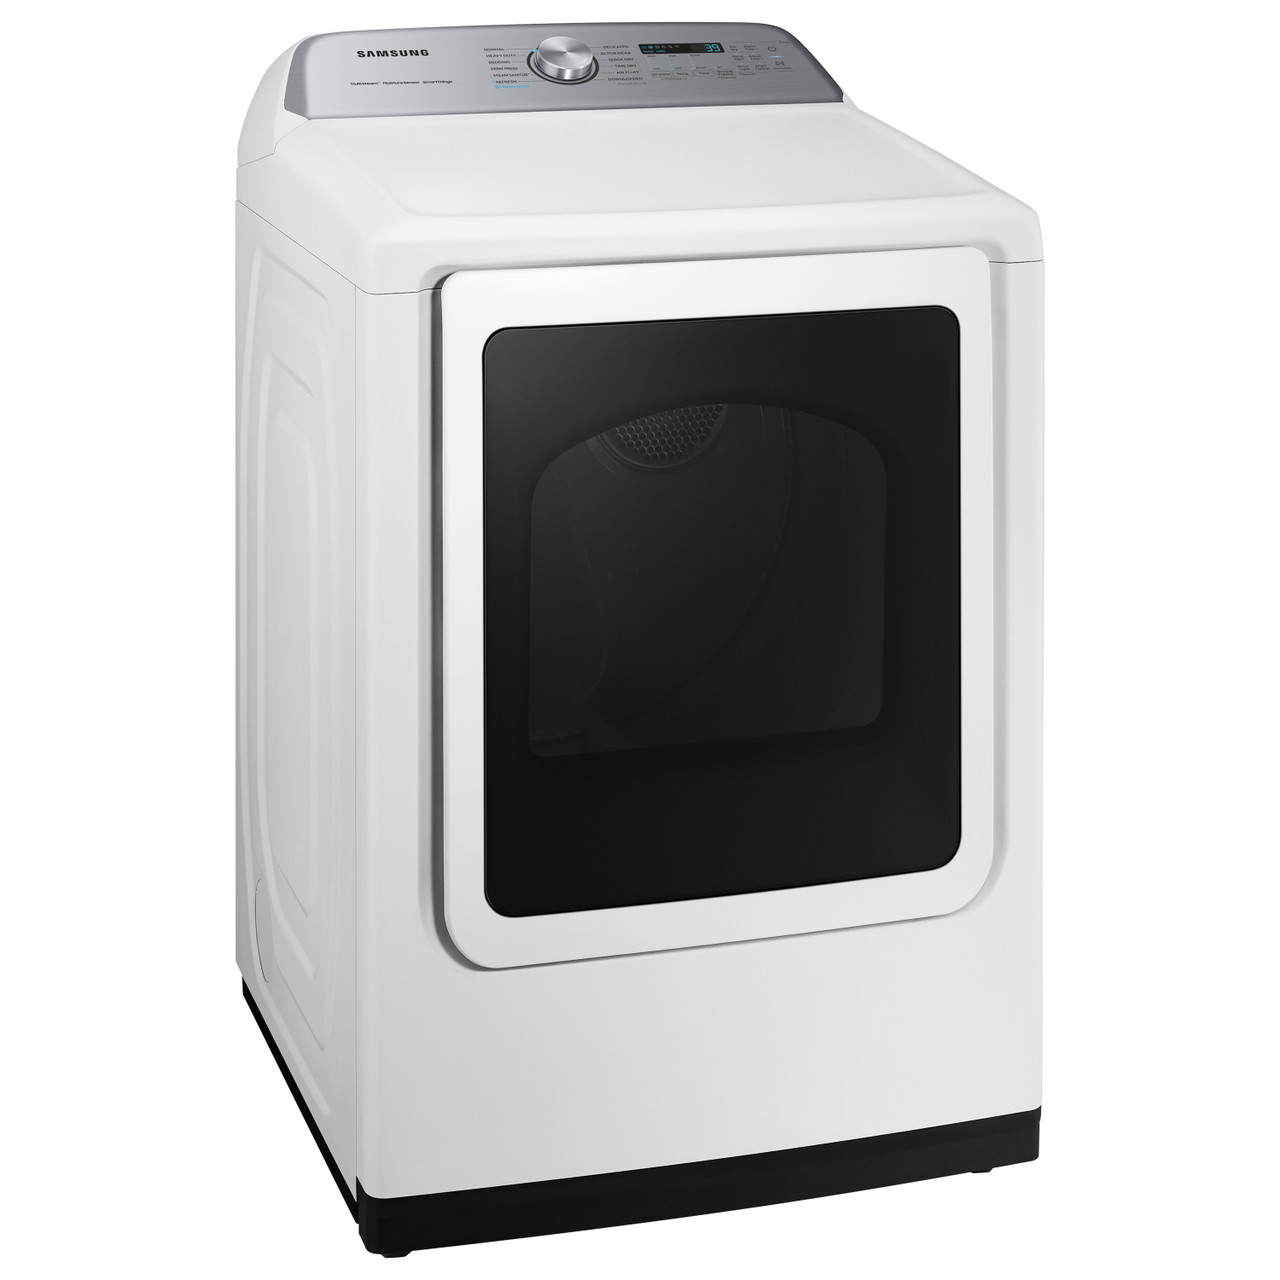 Samsung 7.4 cu. ft. Smart Gas Dryer with Steam Sanitize+ - DVG52A5500W